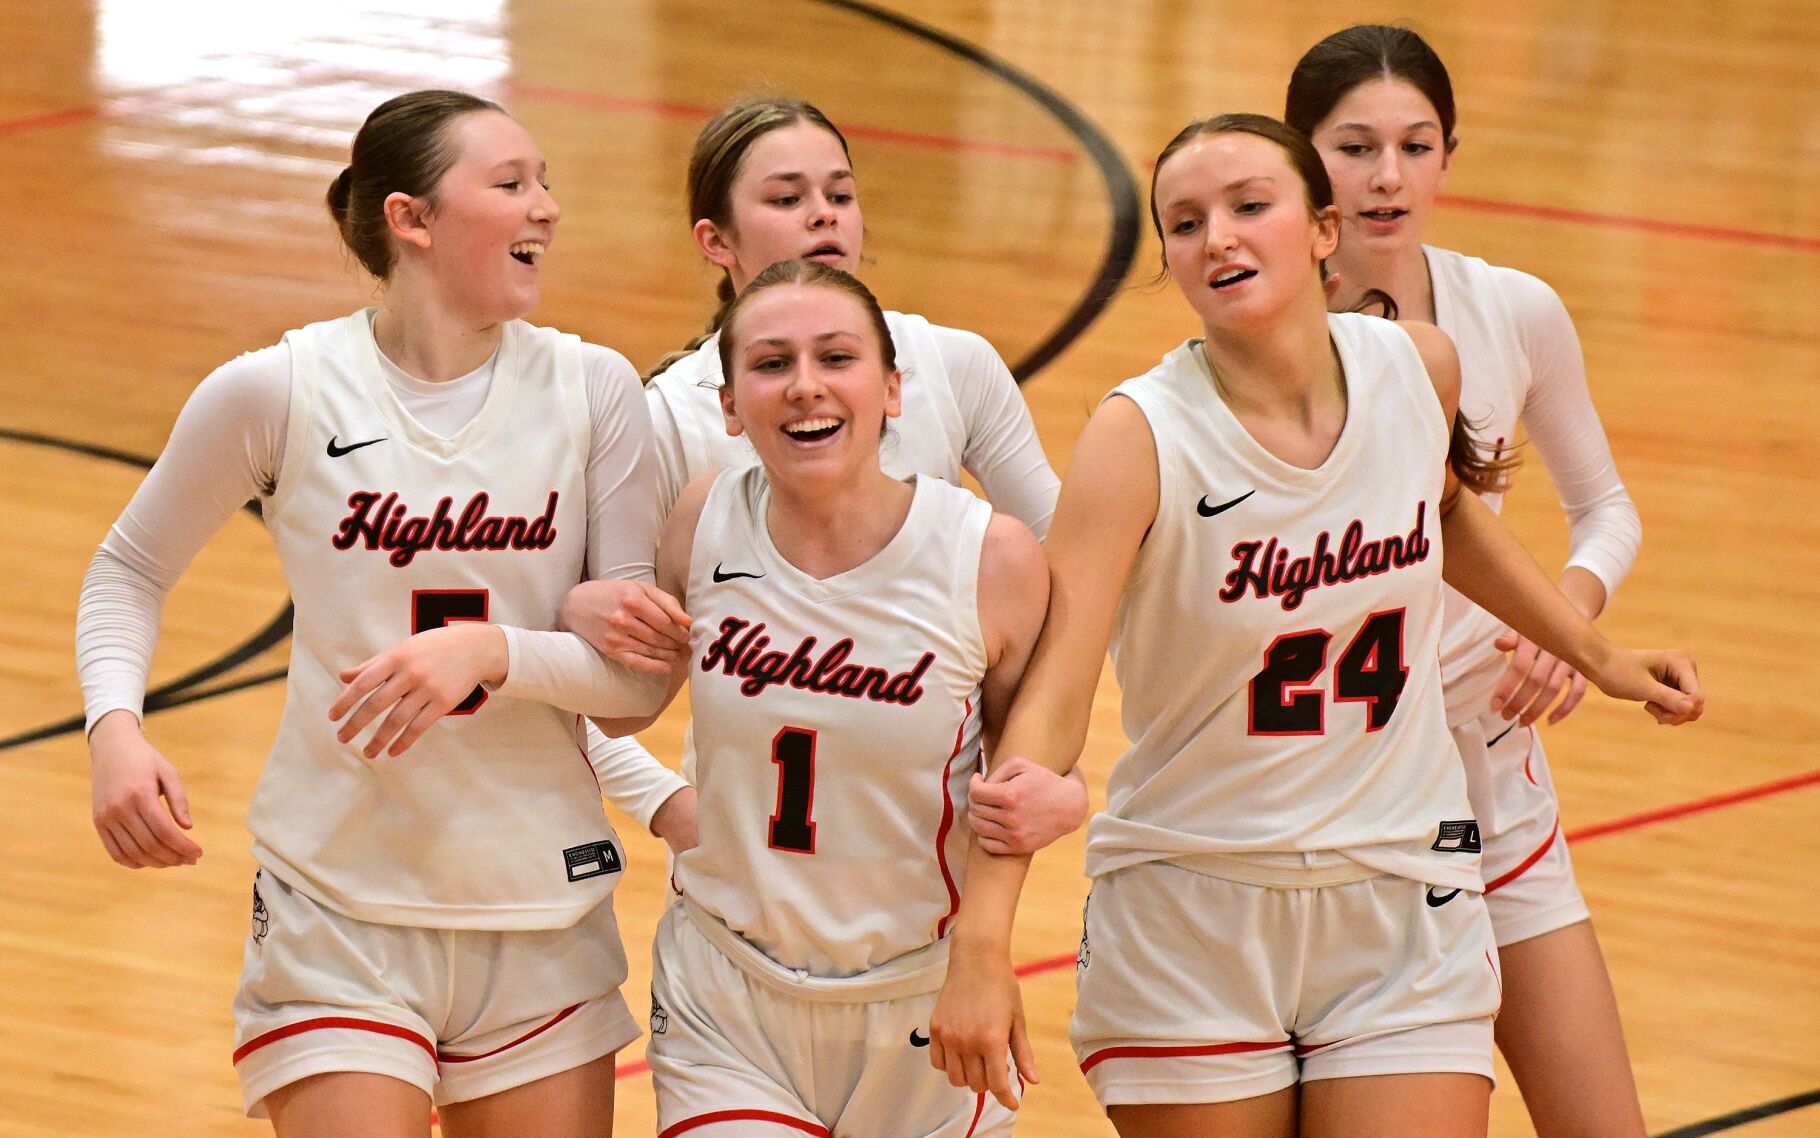 Highland Girls Basketball Team Makes History with Unbeaten League Season Victory